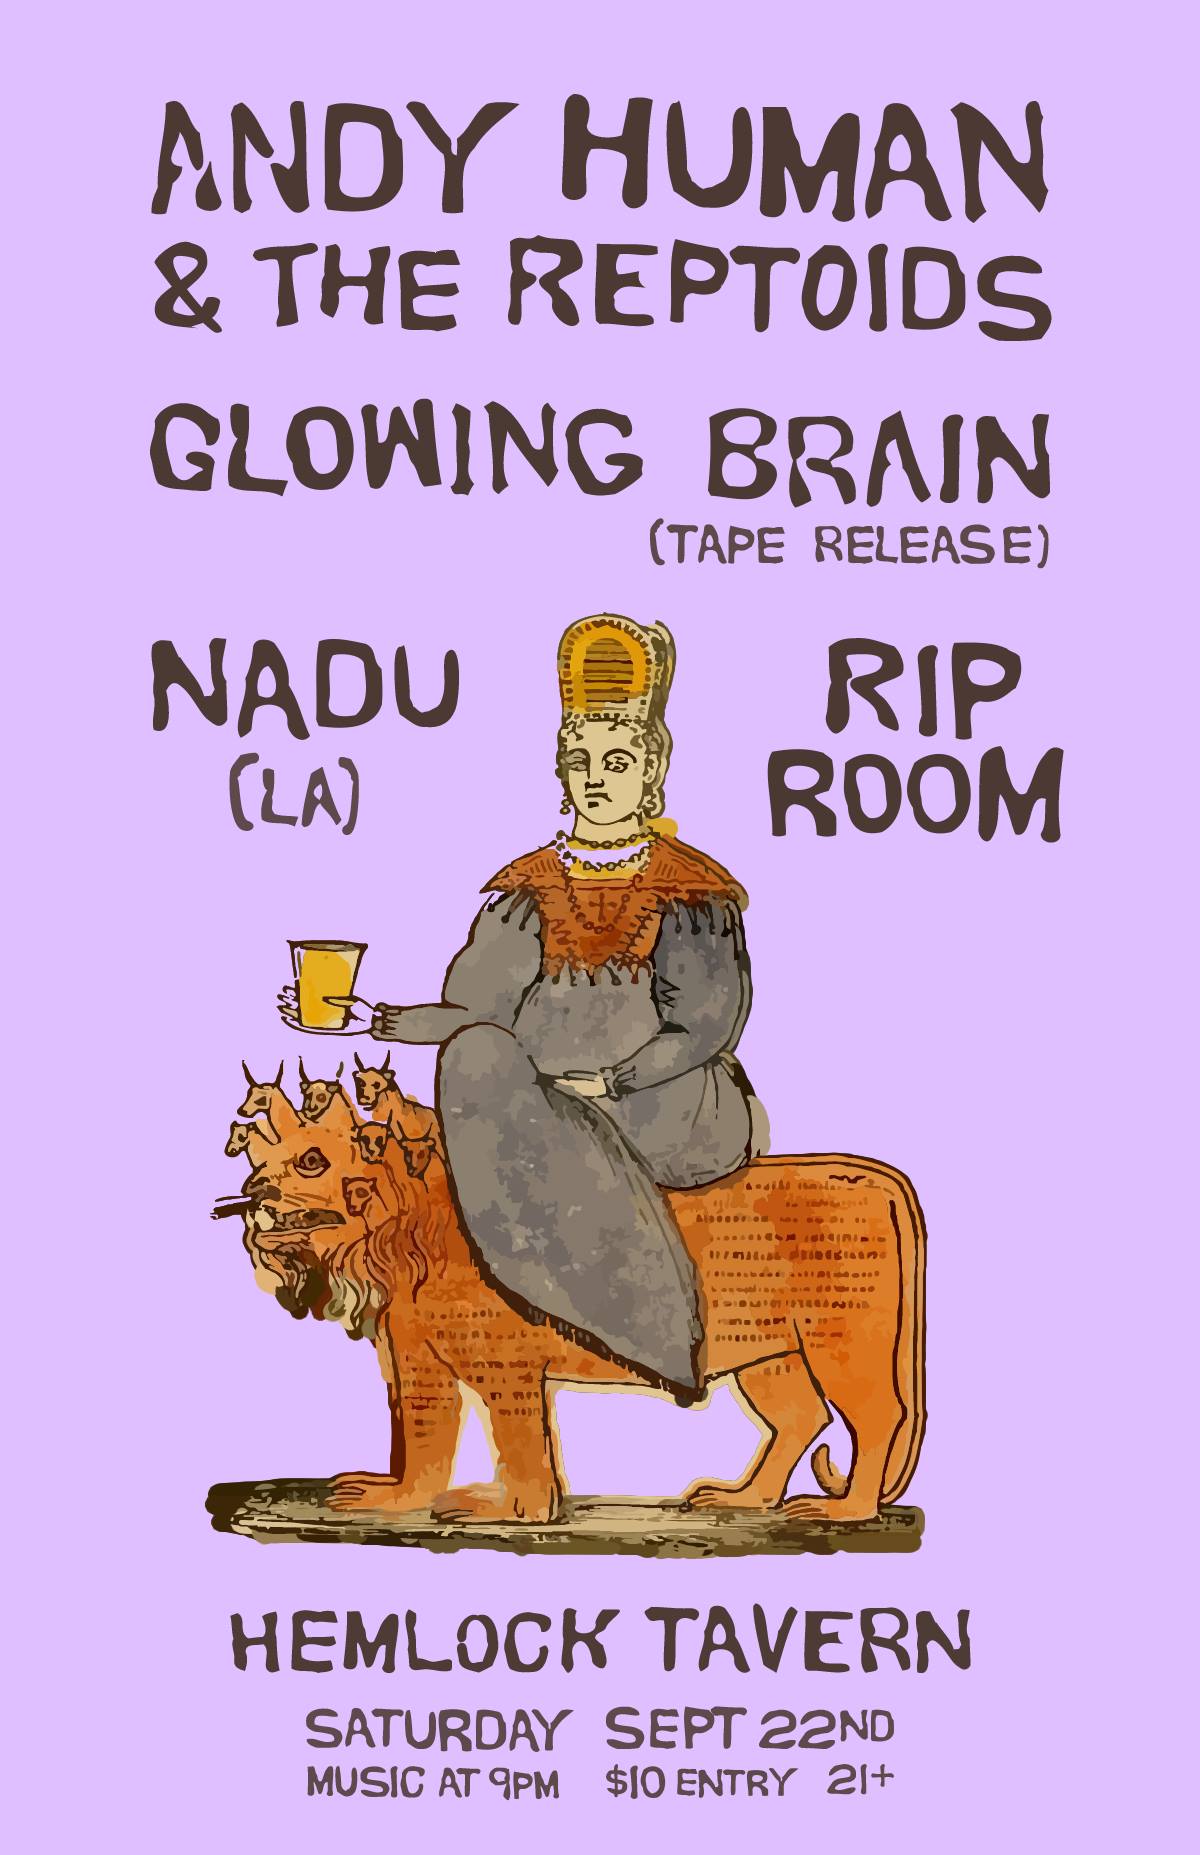 Andy Human, Glowing Brain, Rip Room, Nadu at Hemlock Tavern